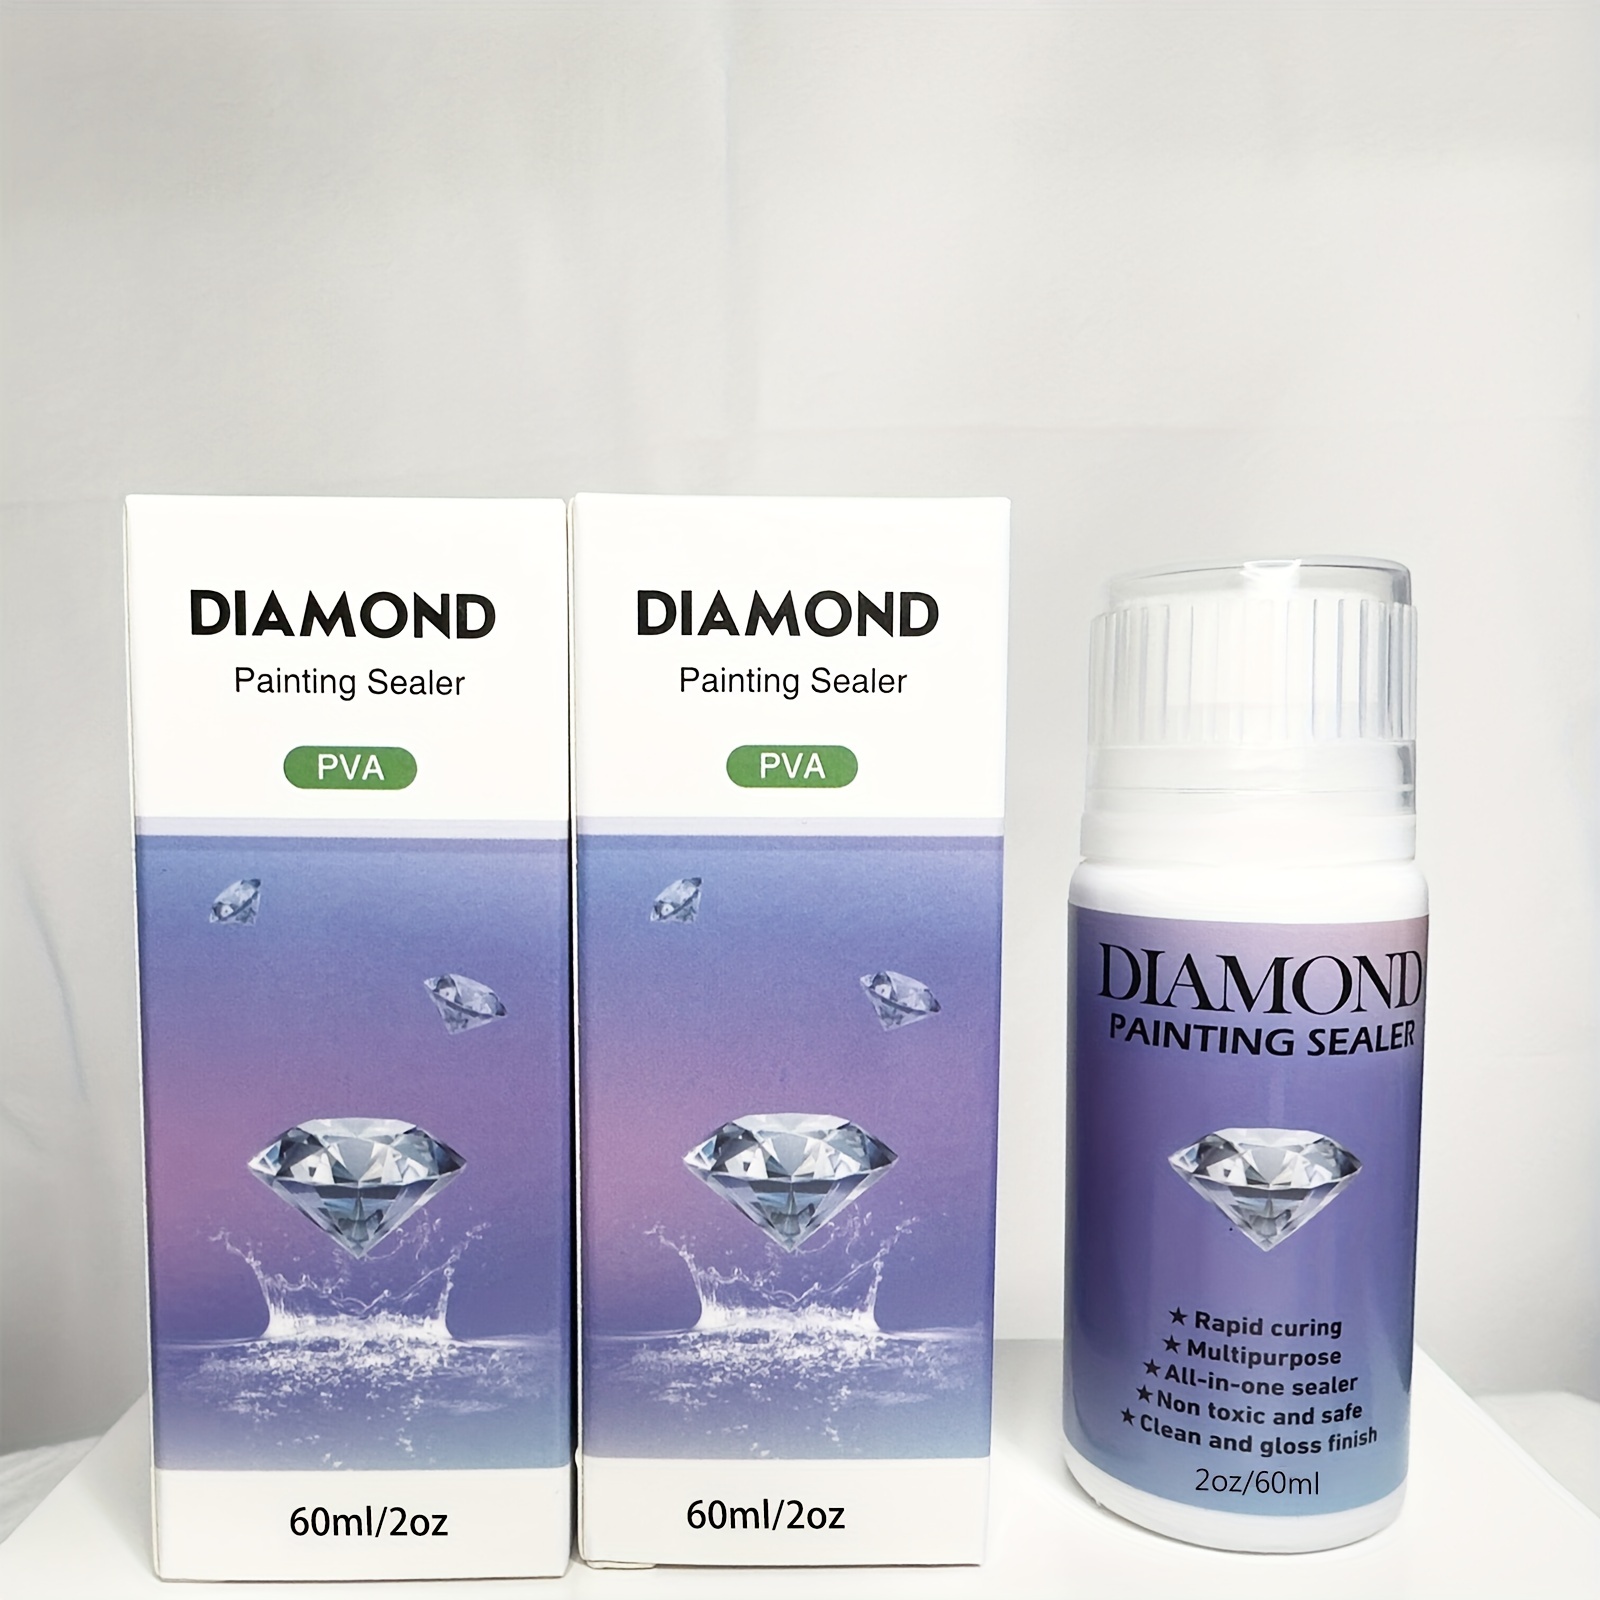 Diamond Dotz Sealer, Dotz Guard Diamond Painting Sealant, Clear Varnish  Seal NEW